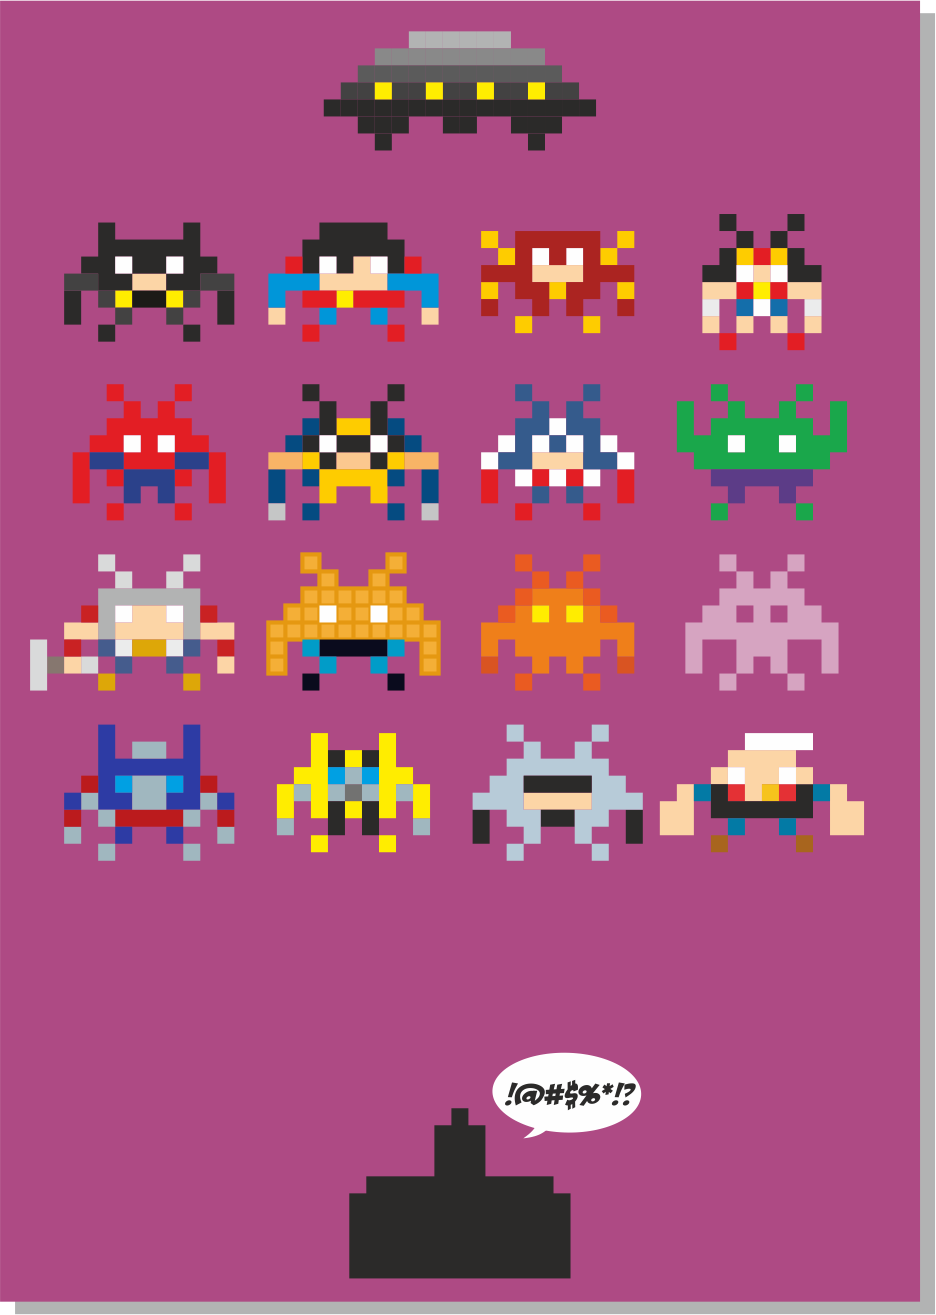 Space  invader pixels pixel batman superman android Starwars Flash woman game 8 bit Retro andthen